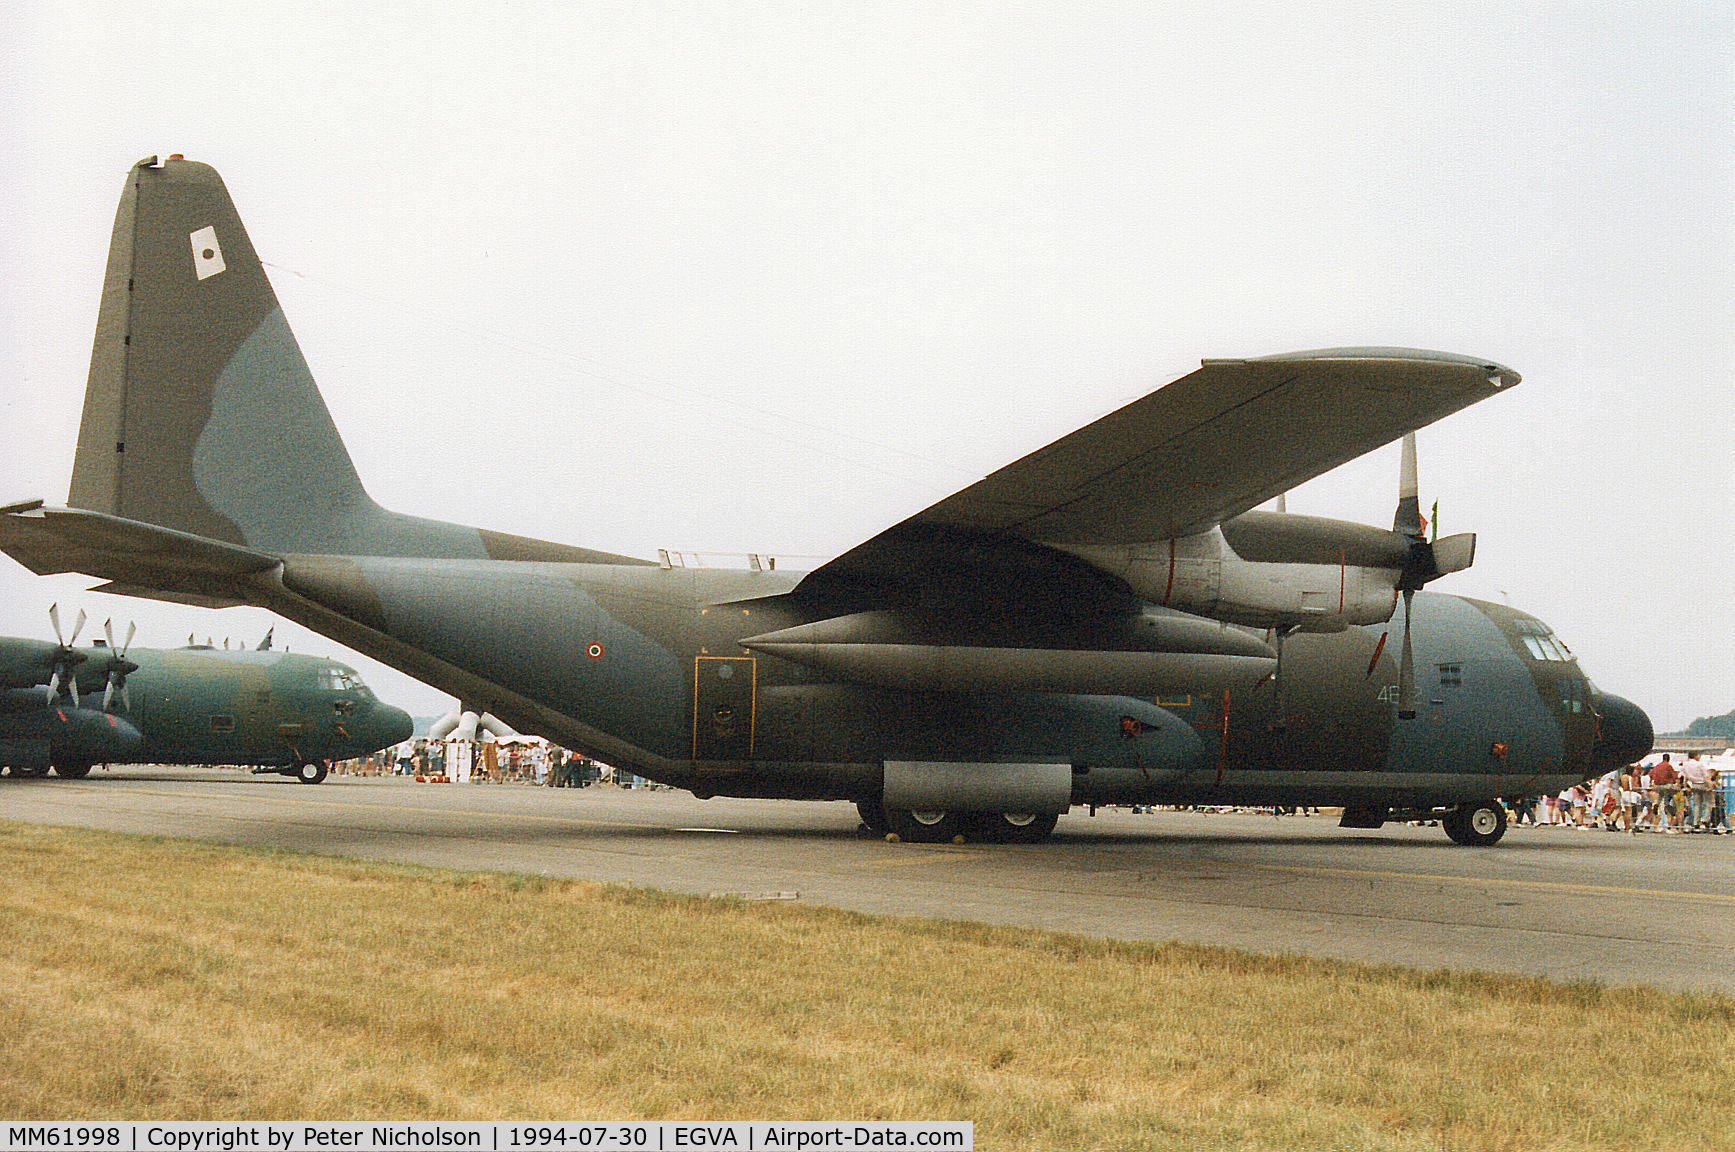 MM61998, 1973 Lockheed C-130H Hercules C/N 382-4494, C-130H Hercules, callsign India 1997, of 46 Brigada Aerea Italian Air Force on display at the 1994 Intnl Air Tattoo at RAF Fairford.